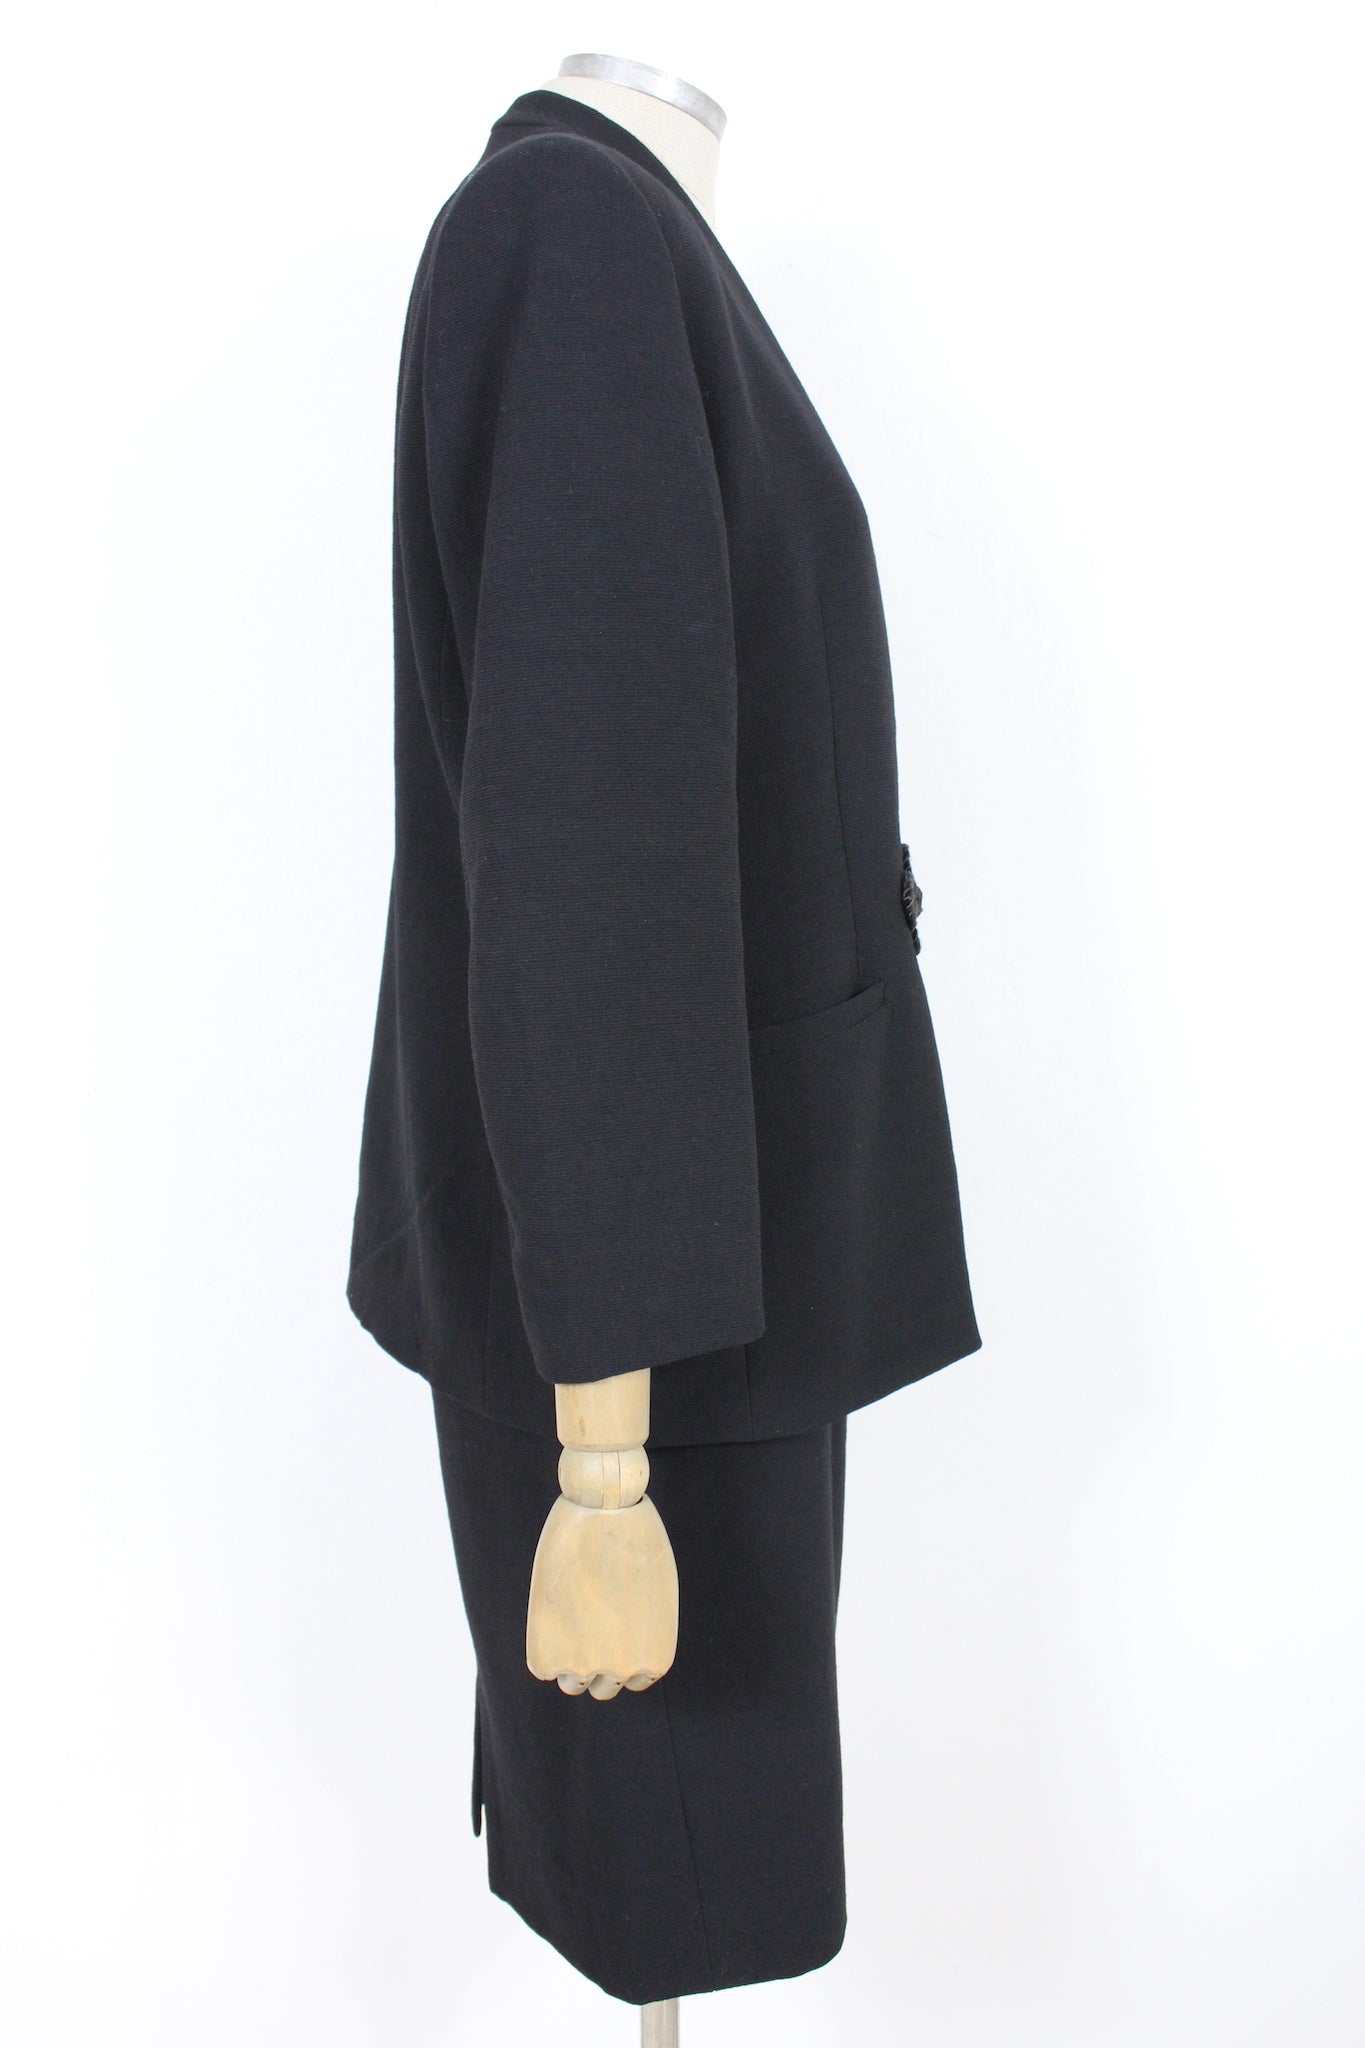 Pierre Cardin Black Elegant Skirt Suit Vintage 1980s